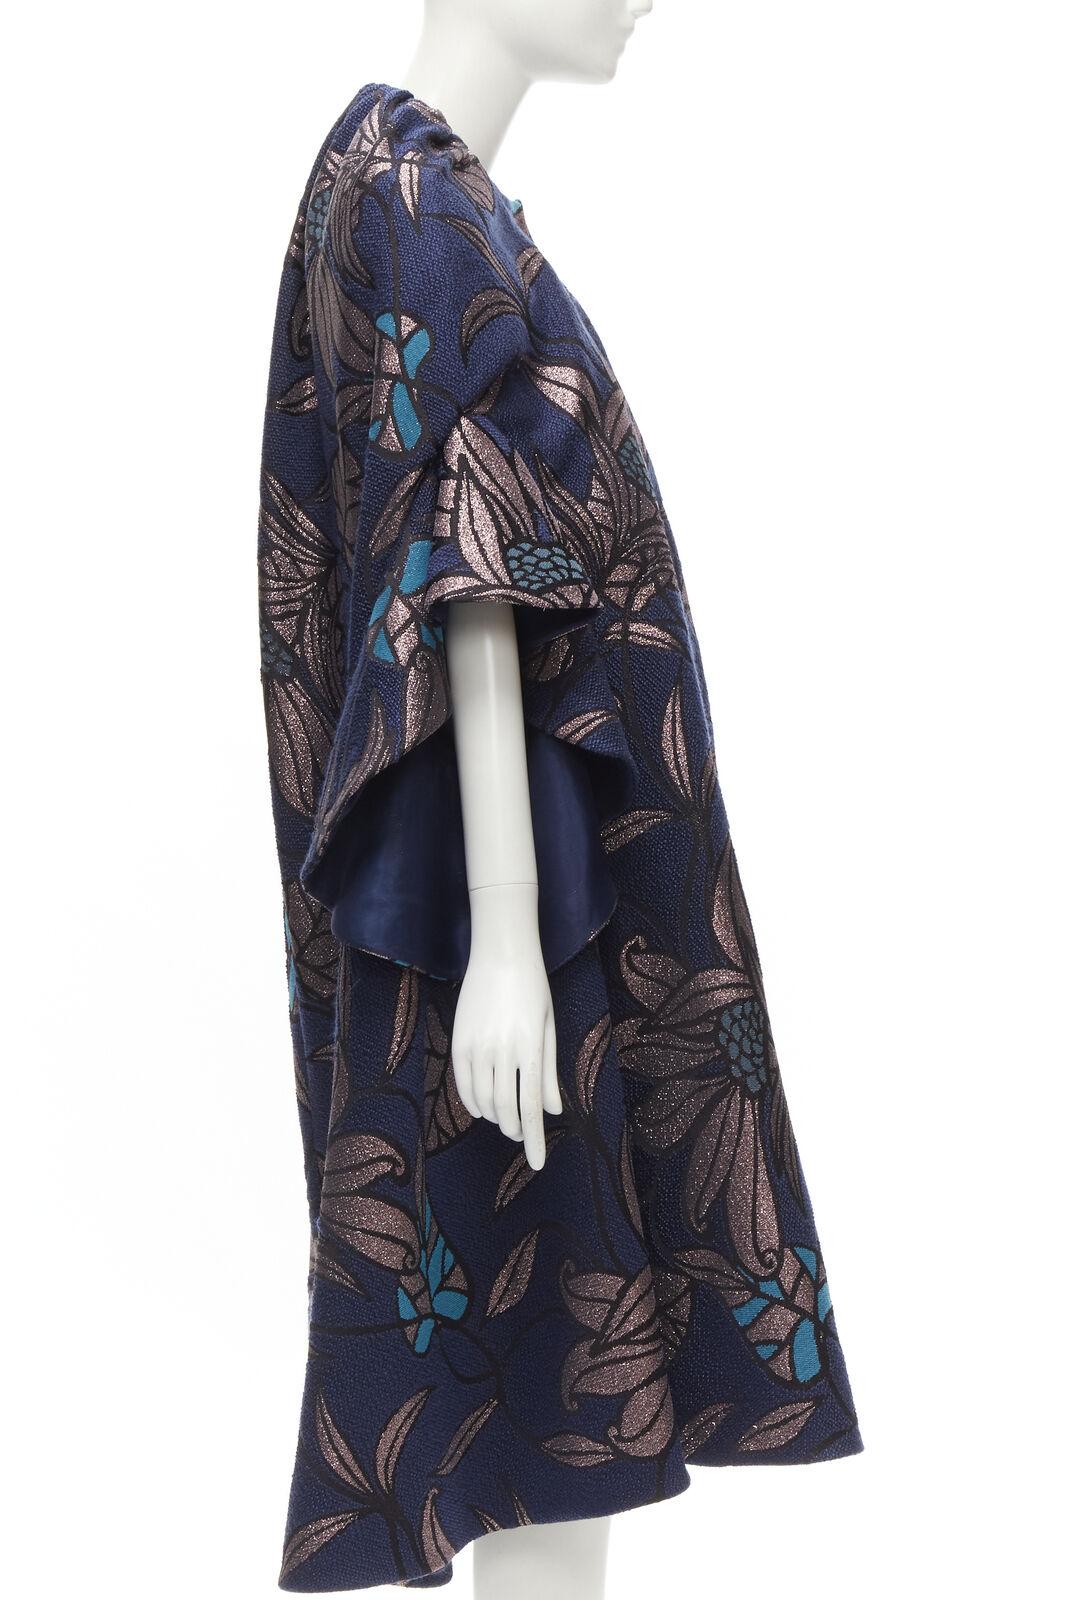 DELPOZO navy bluemetallic floral jacquard ruffled oversized cape coat FR34 XS 1